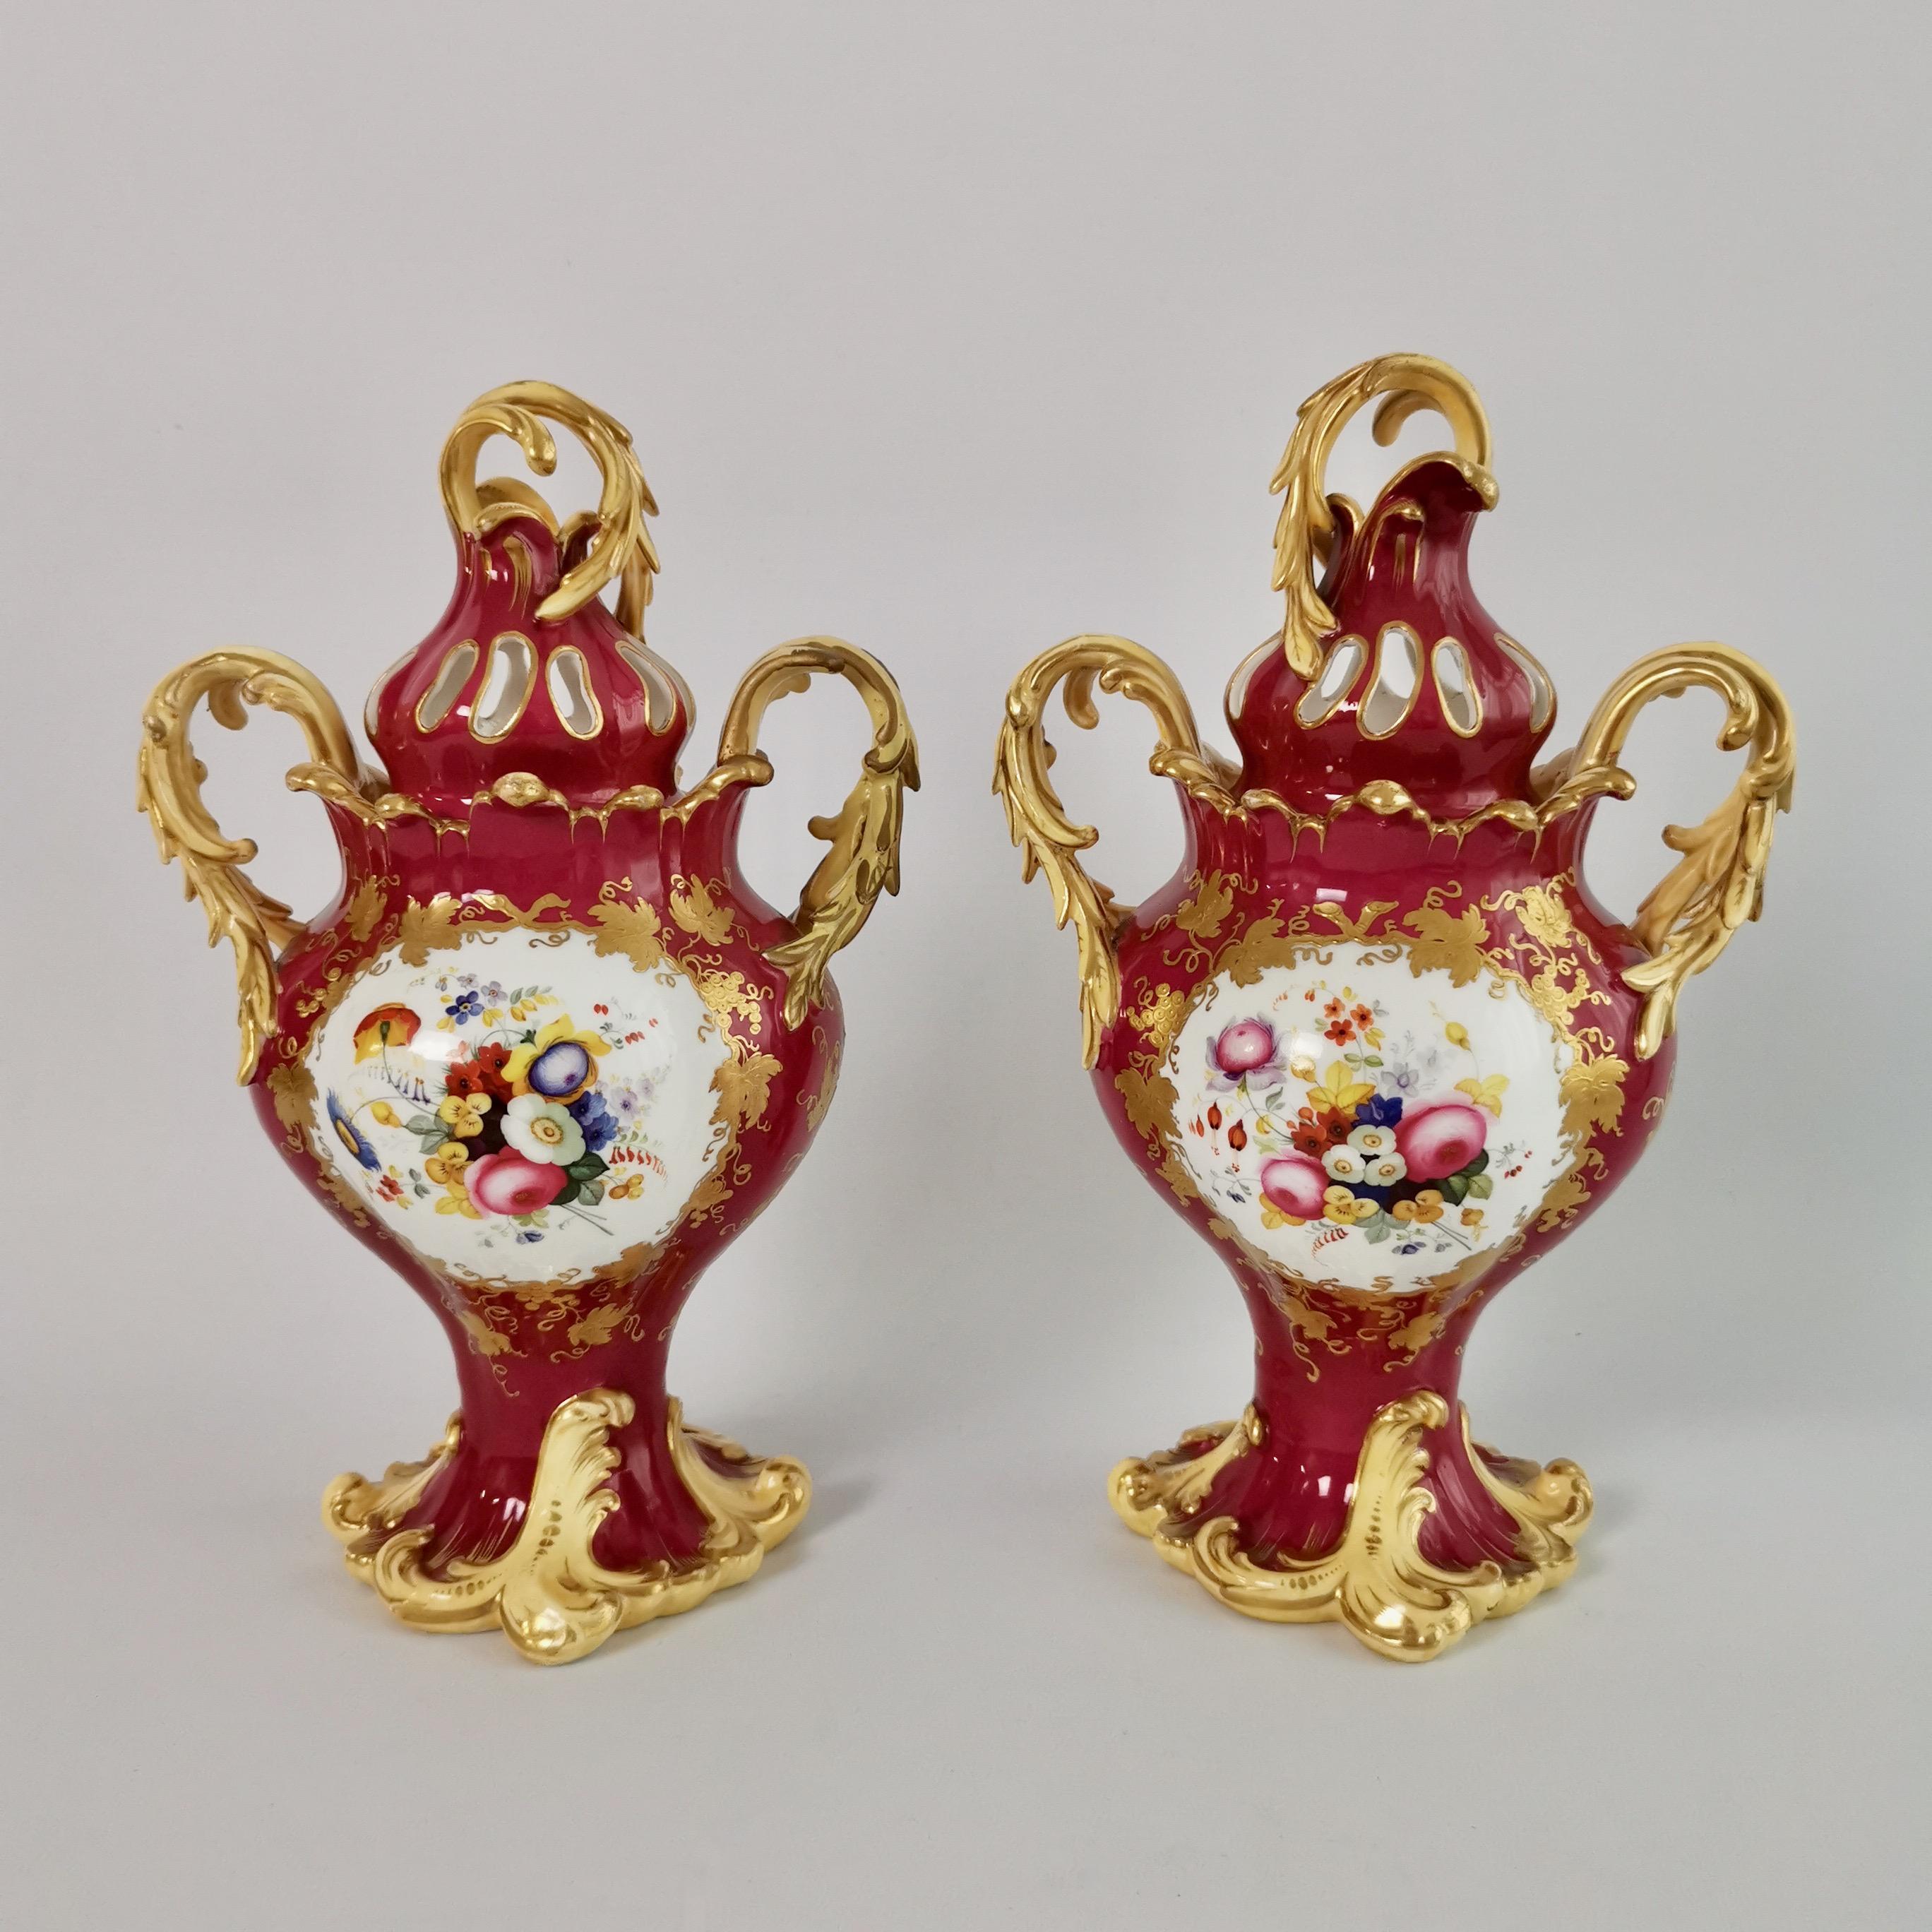 English H&R Daniel Pair of Potpourri Vases, Maroon, Birds, Flowers, Rococo Revival c1840 For Sale